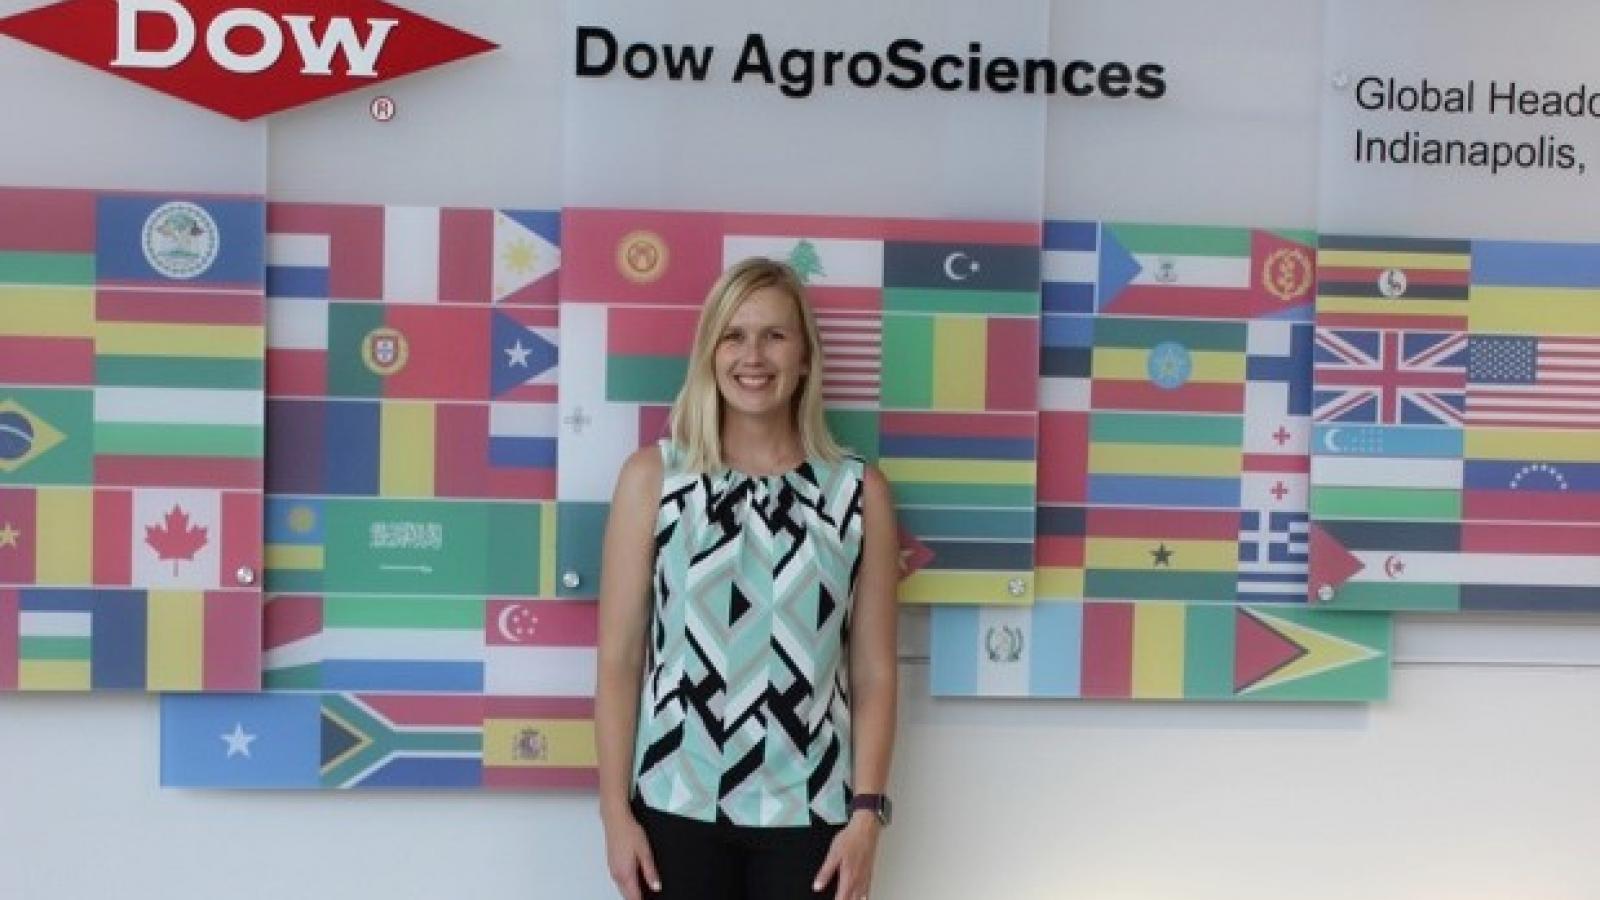 TPS Fellow Ashley Yates during her internship at DOW AgroSciences